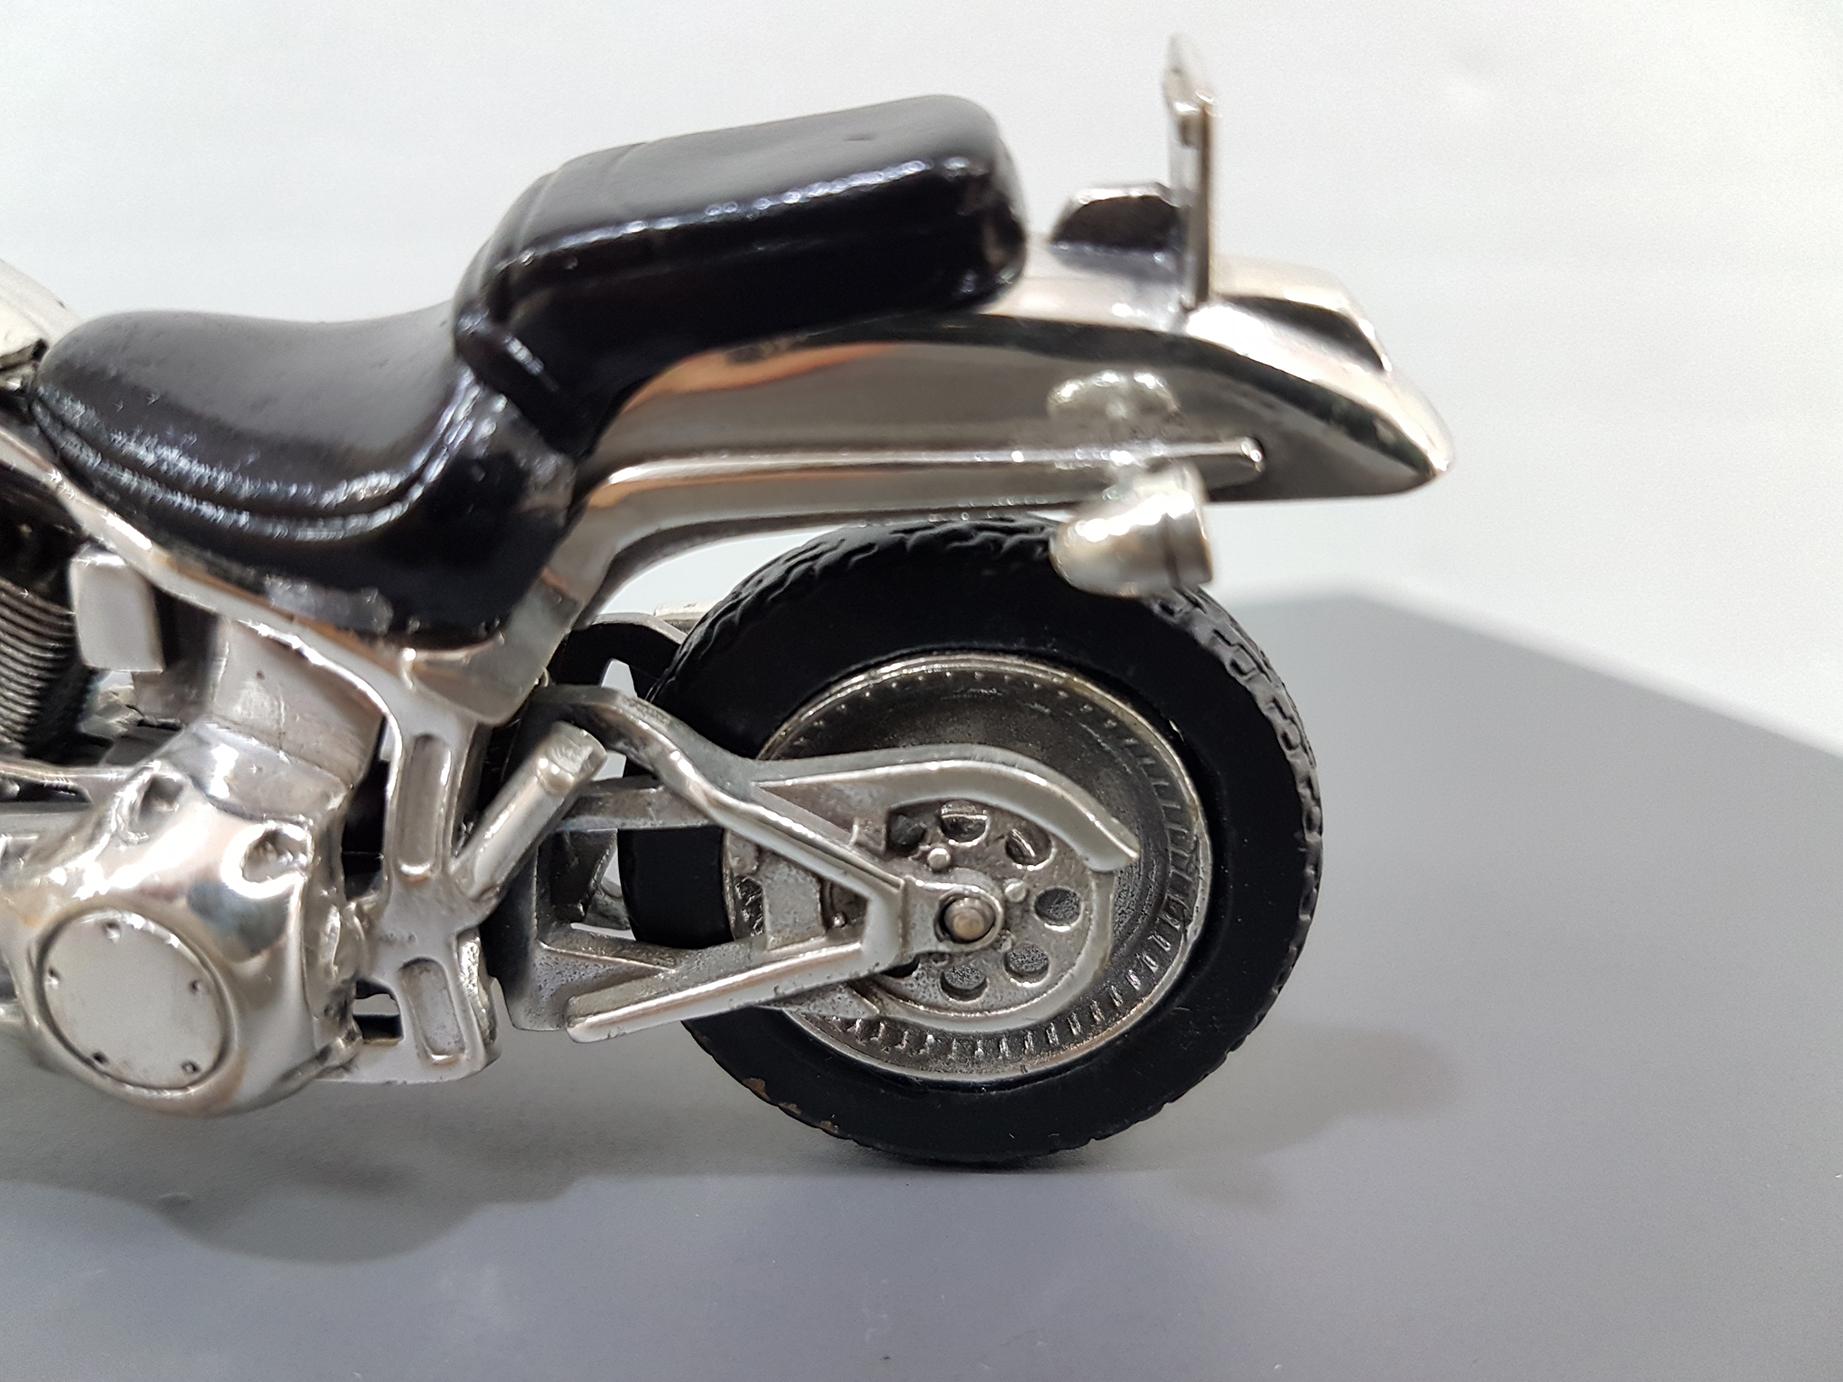 1964 sterling motorcycle